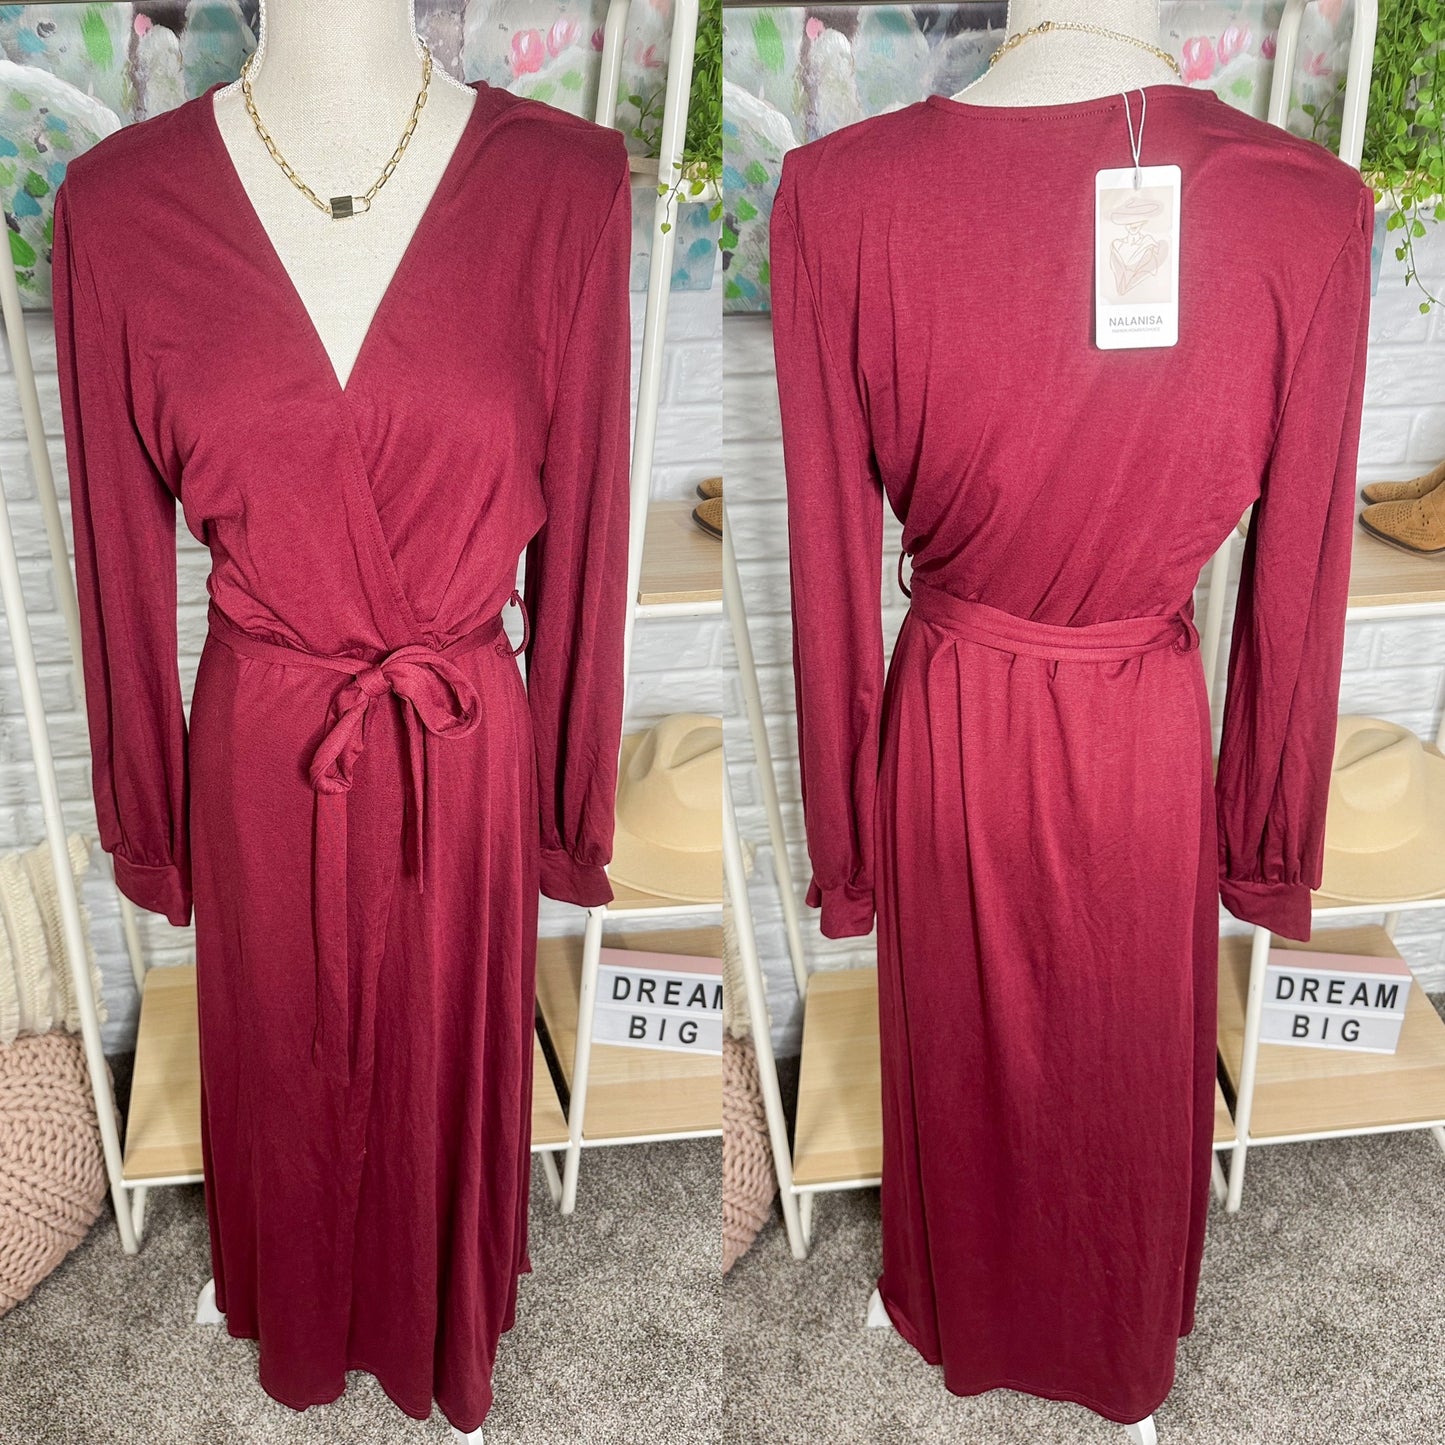 Nalanisa New Red Long Sleeve Wrap Dress Size Large